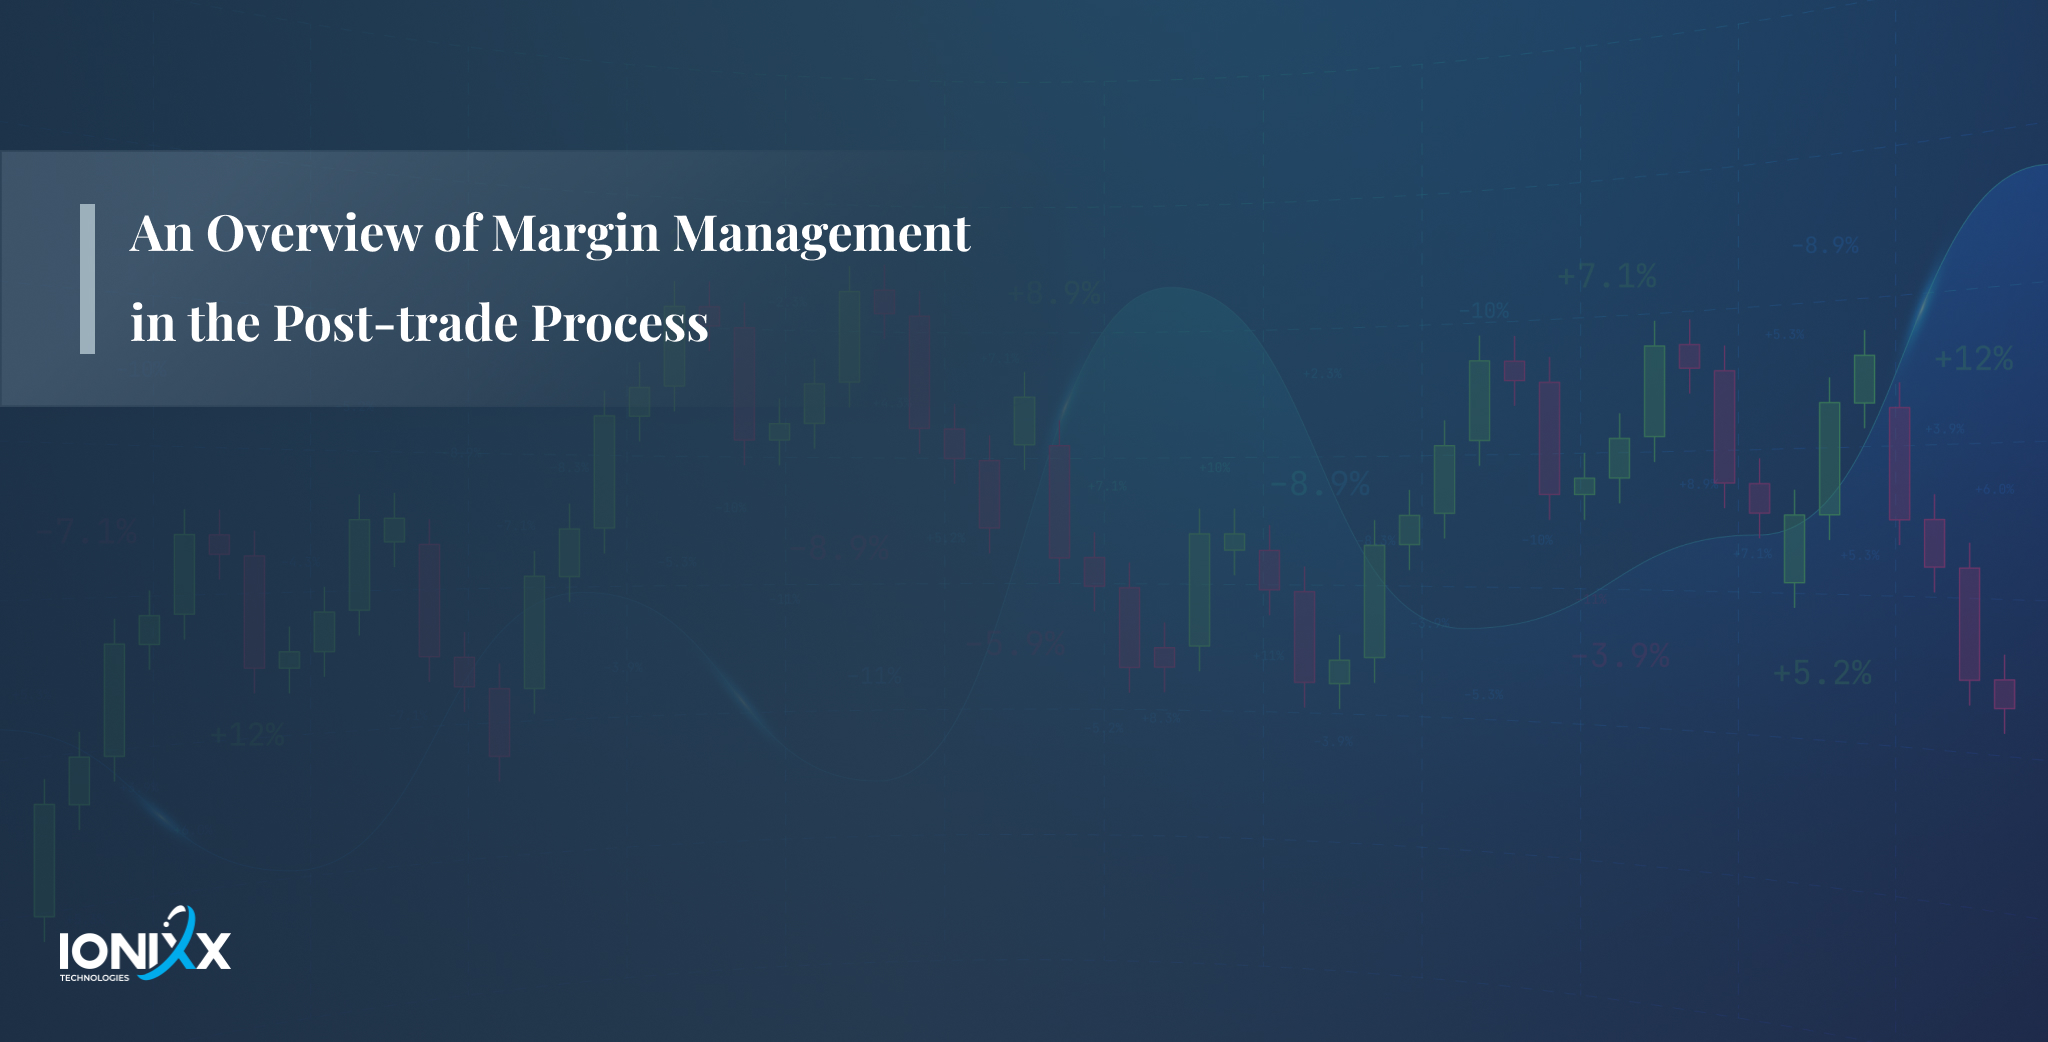 Margin management